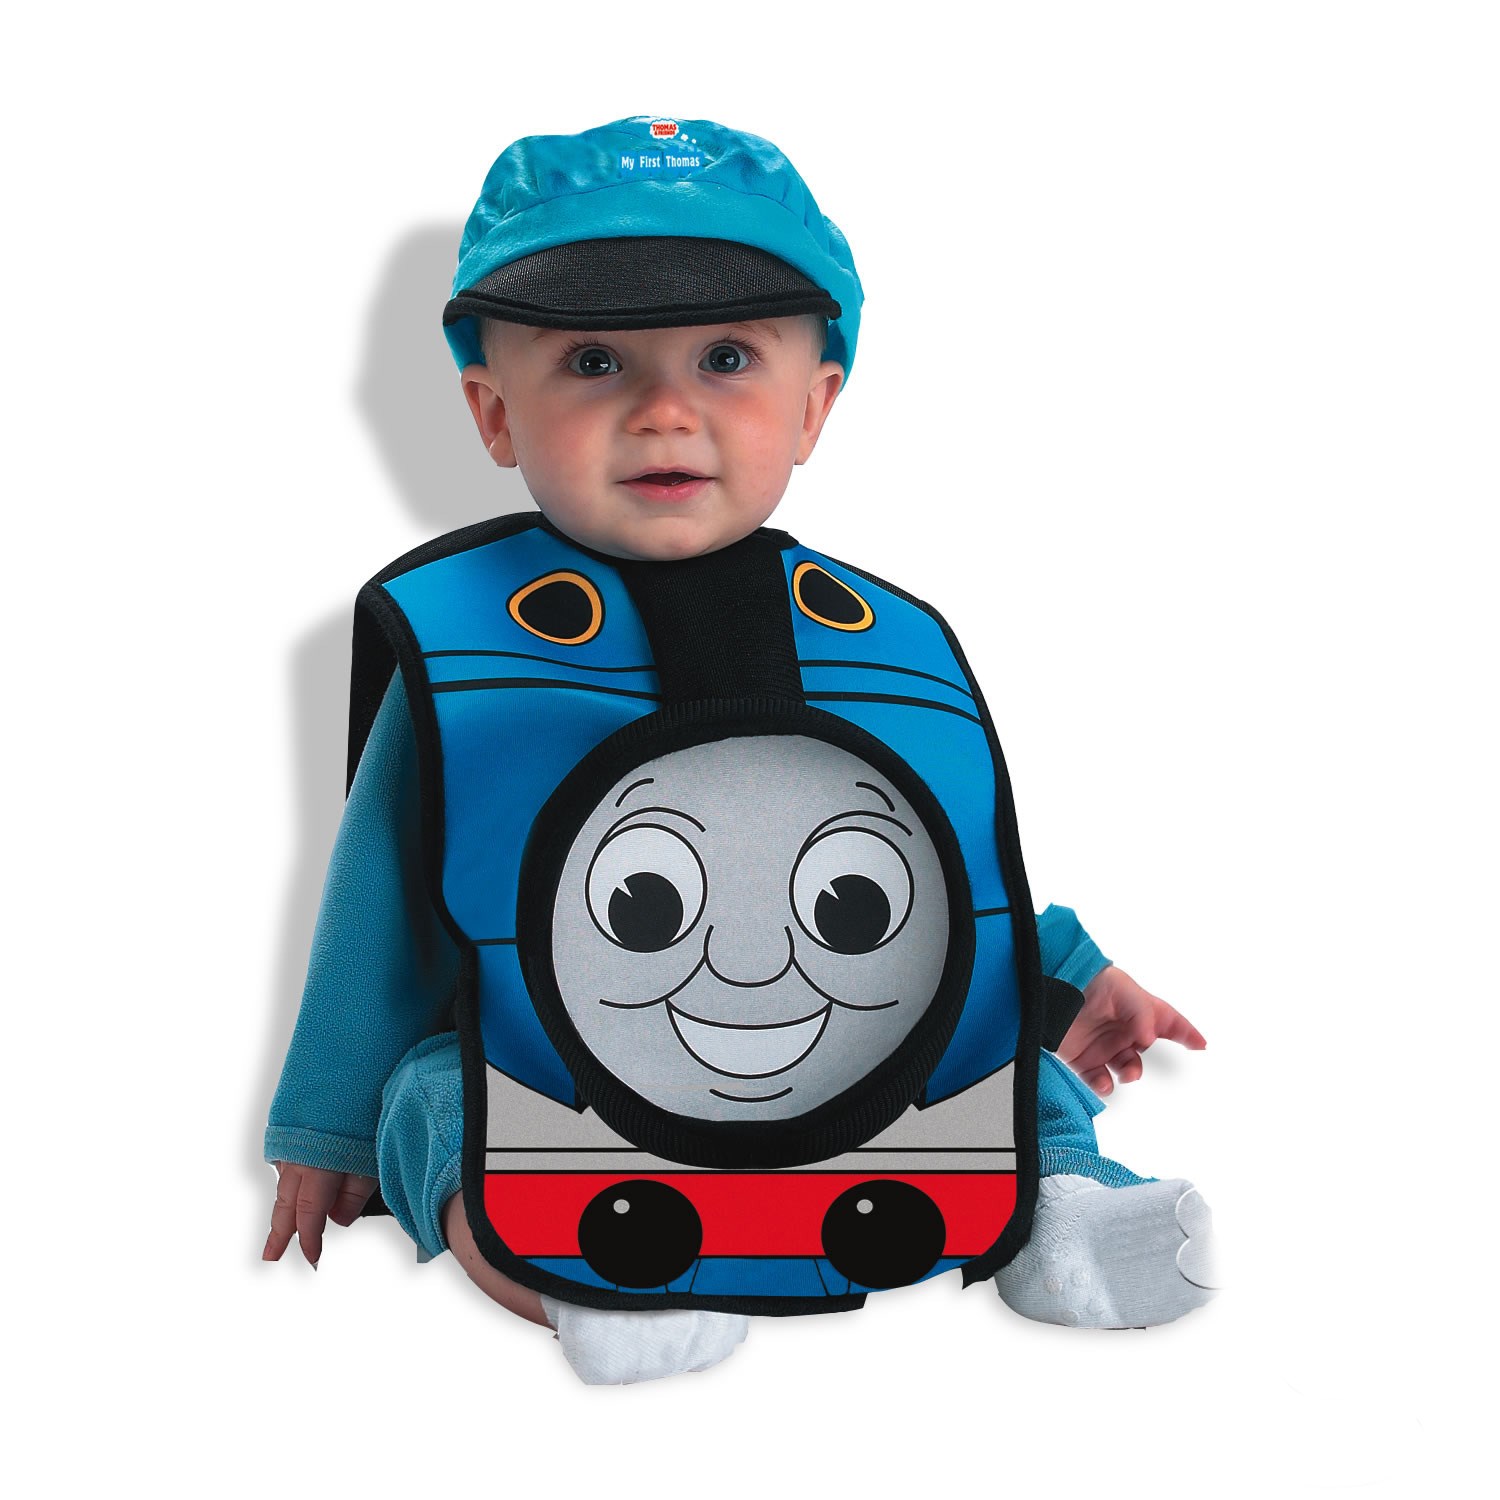 Baby Thomas Train Infant / Toddler Costume